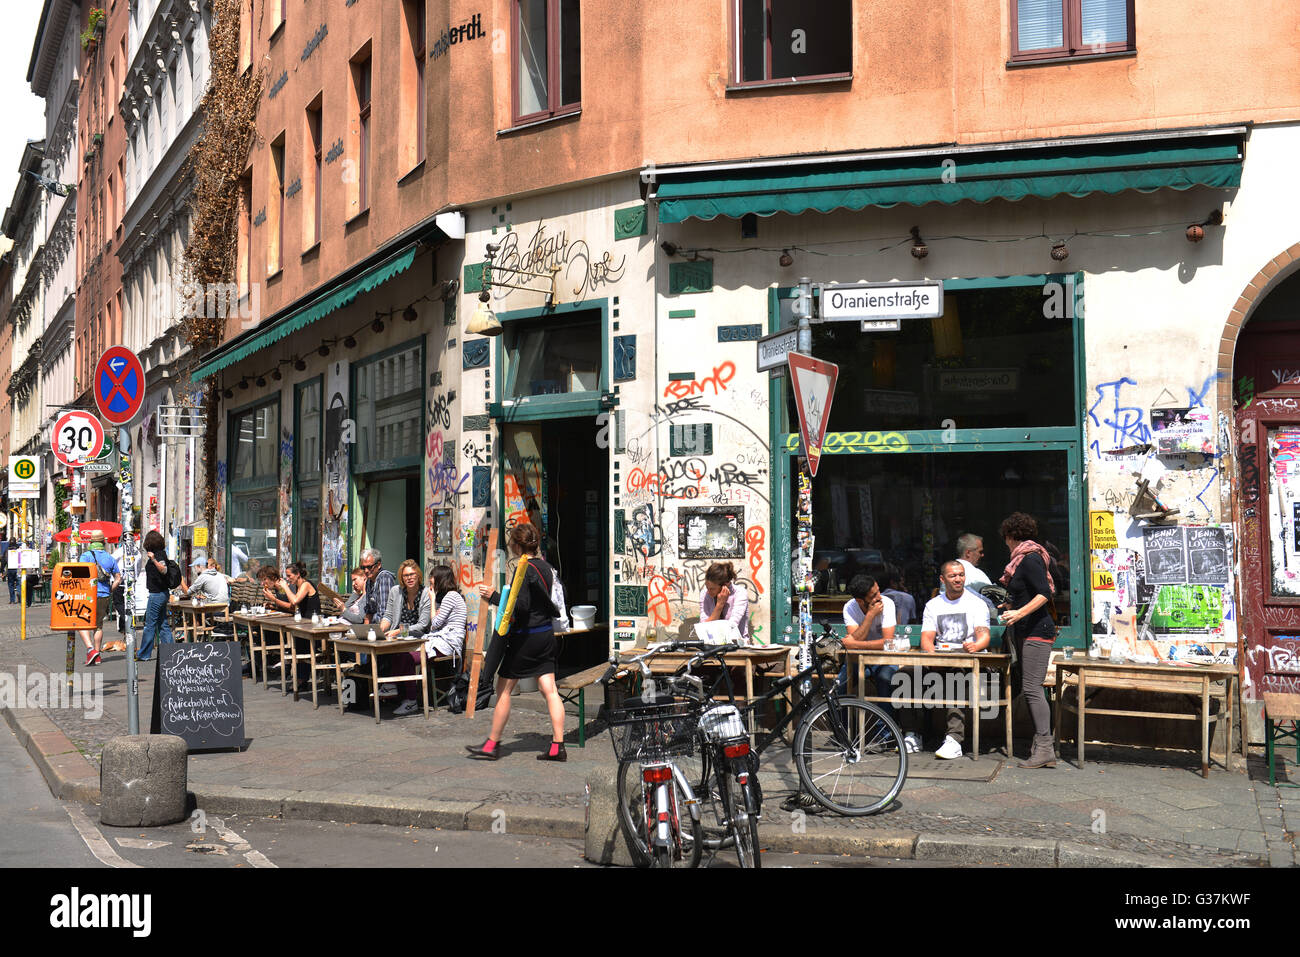 Strassencafe, Bateau Ivre, Oranienstrasse, Kreuzberg di Berlino, Deutschland Foto Stock